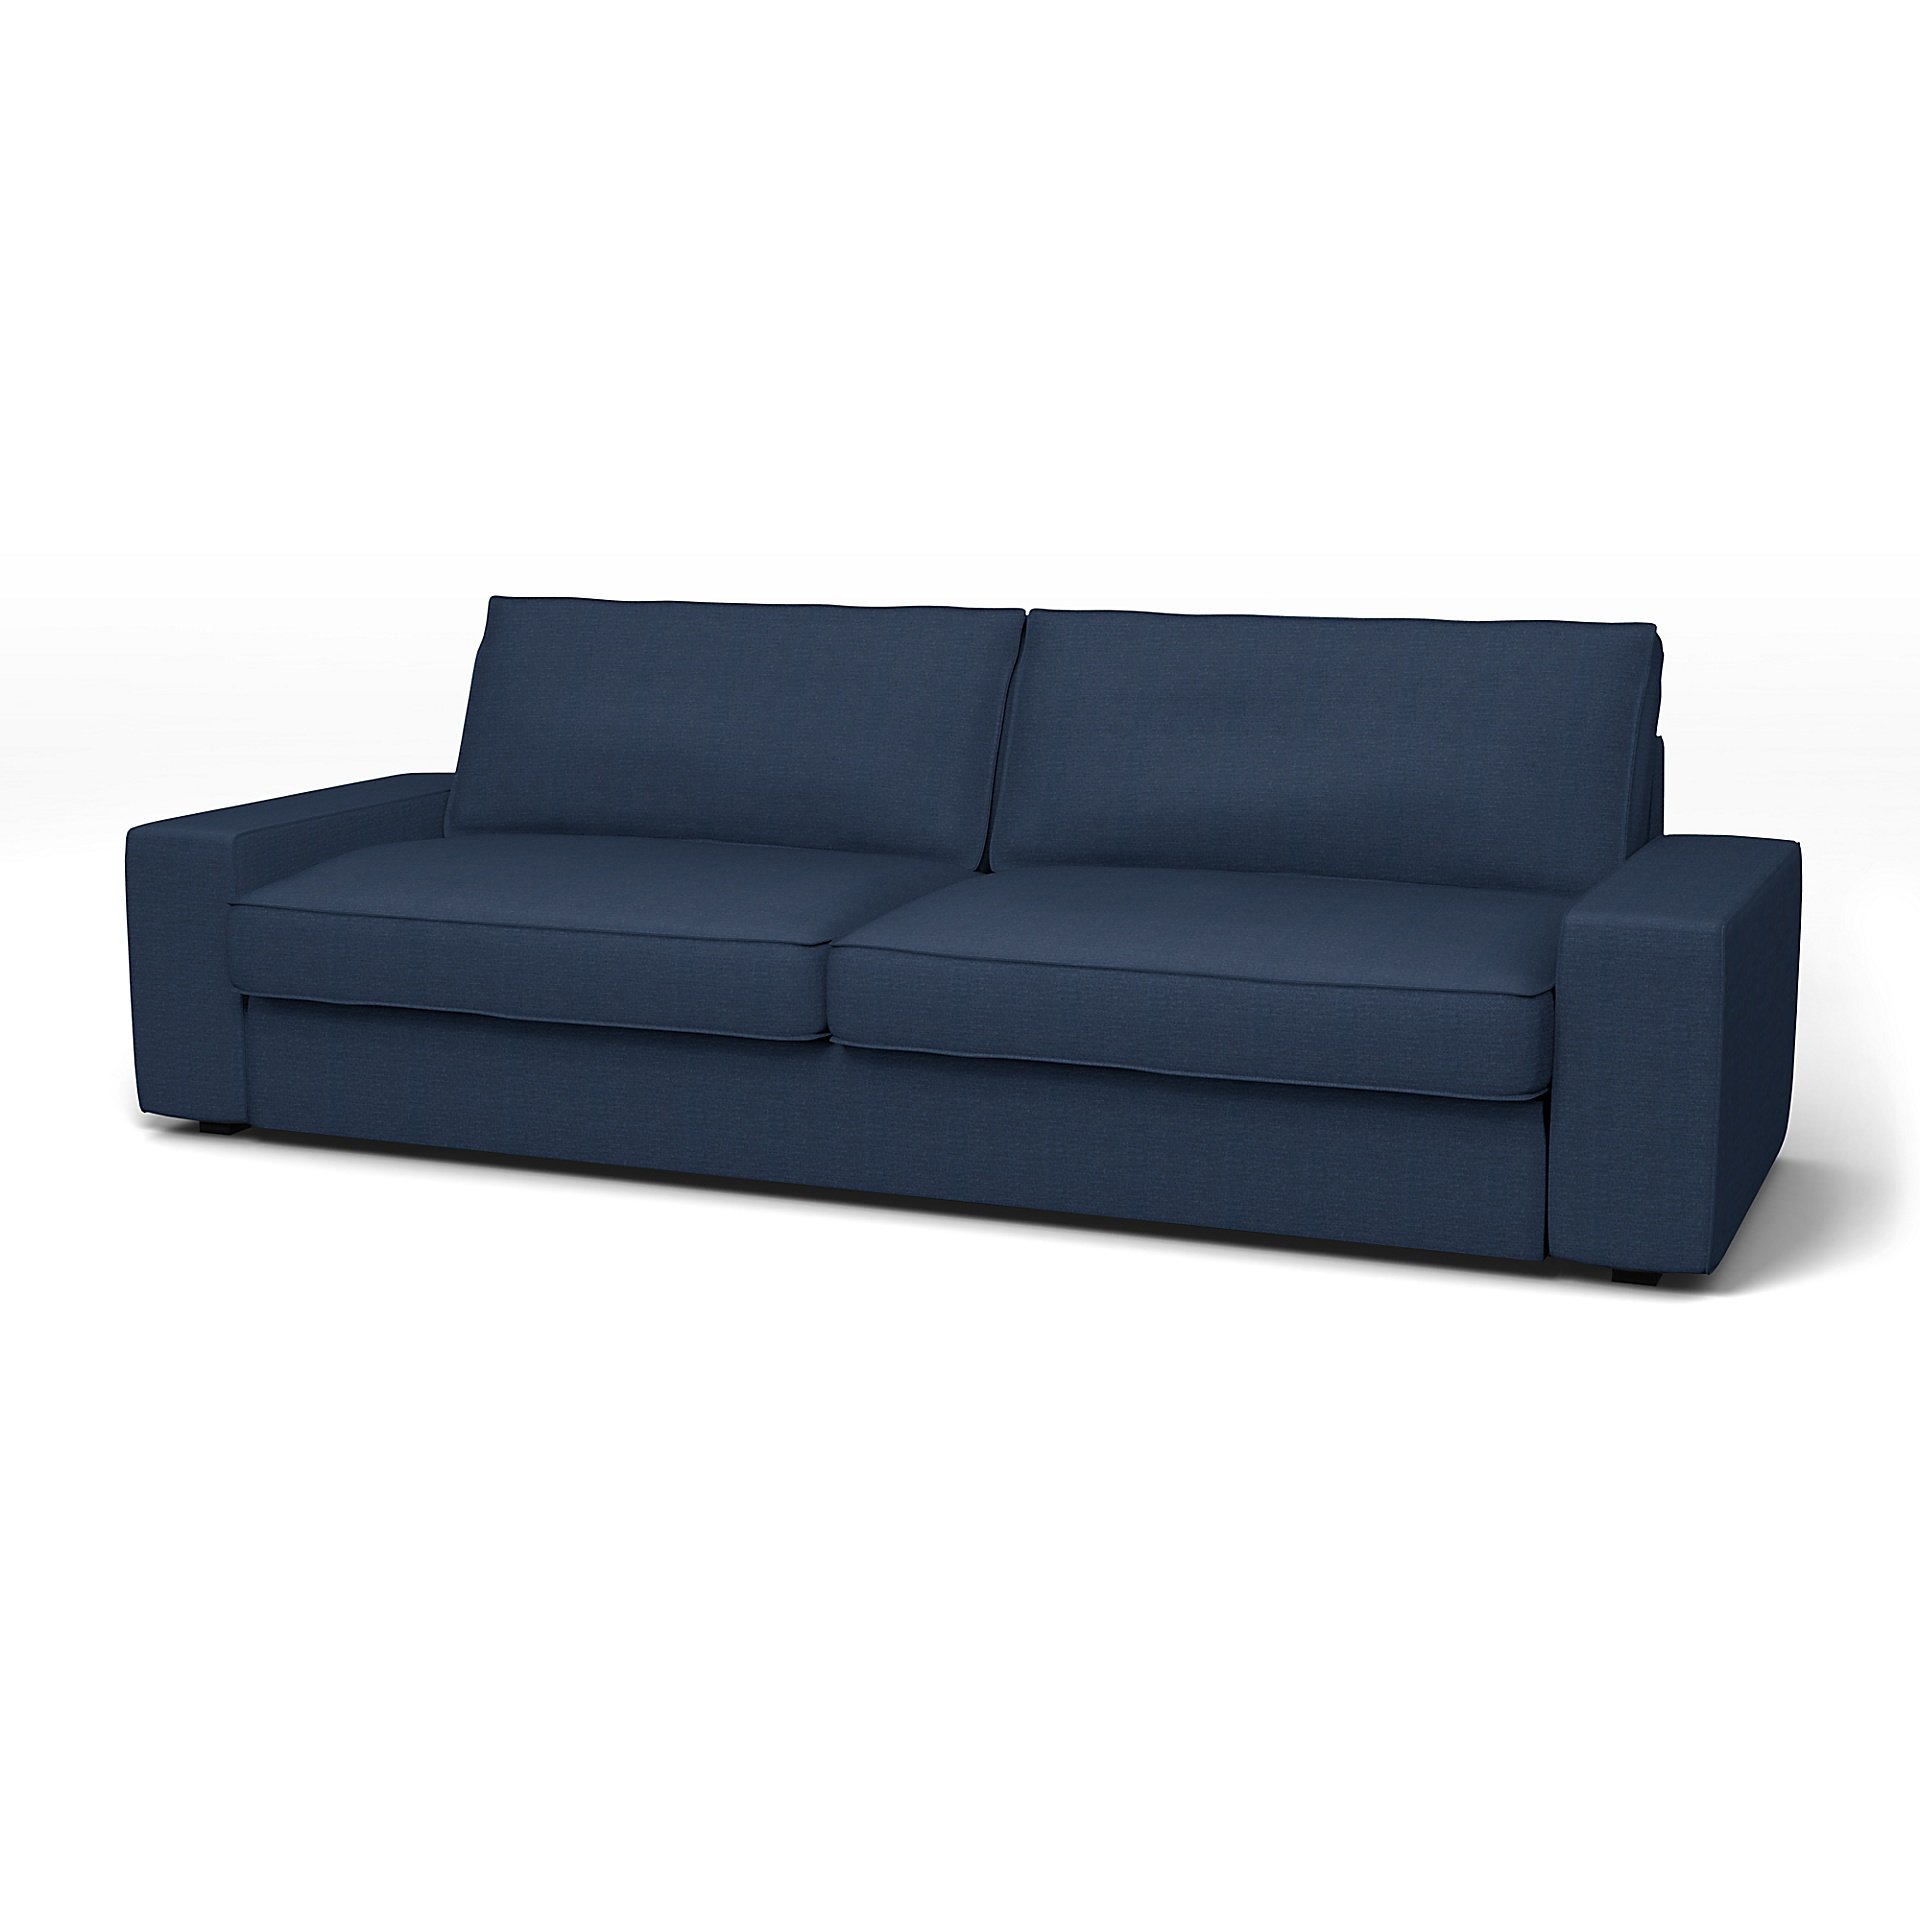 IKEA - Kivik Sofa Bed Cover, Navy Blue, Linen - Bemz